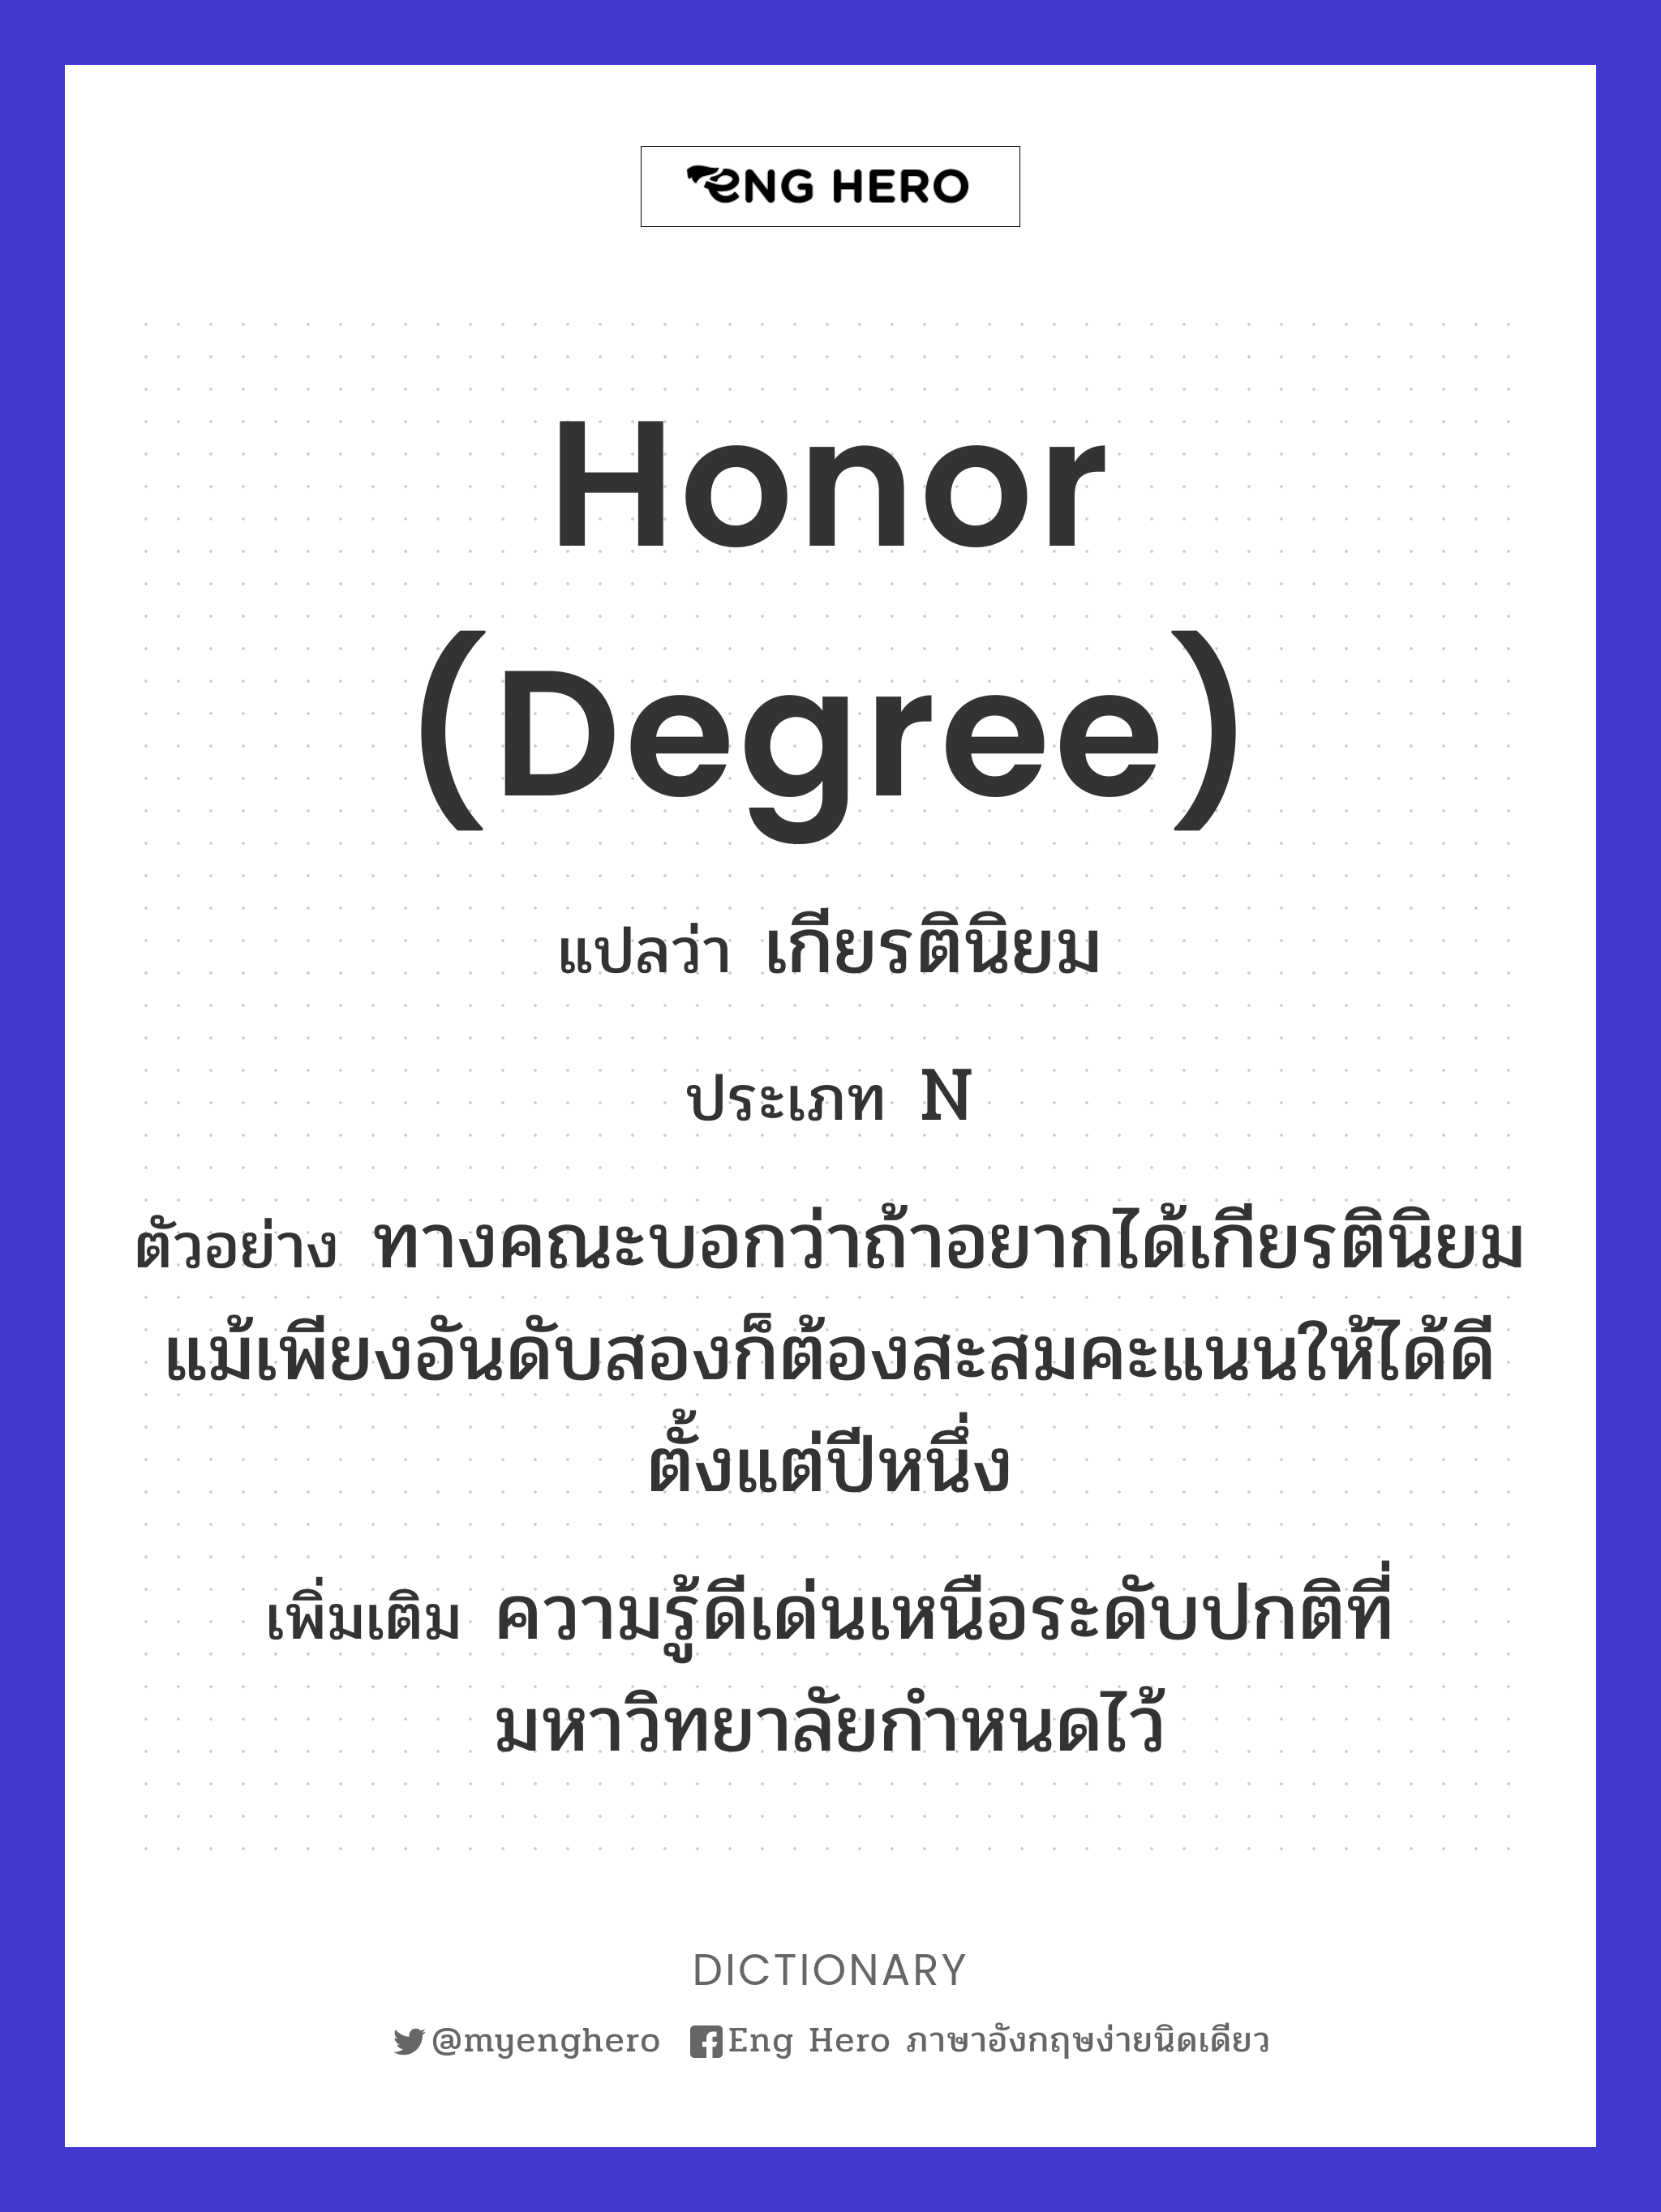 honor (degree)